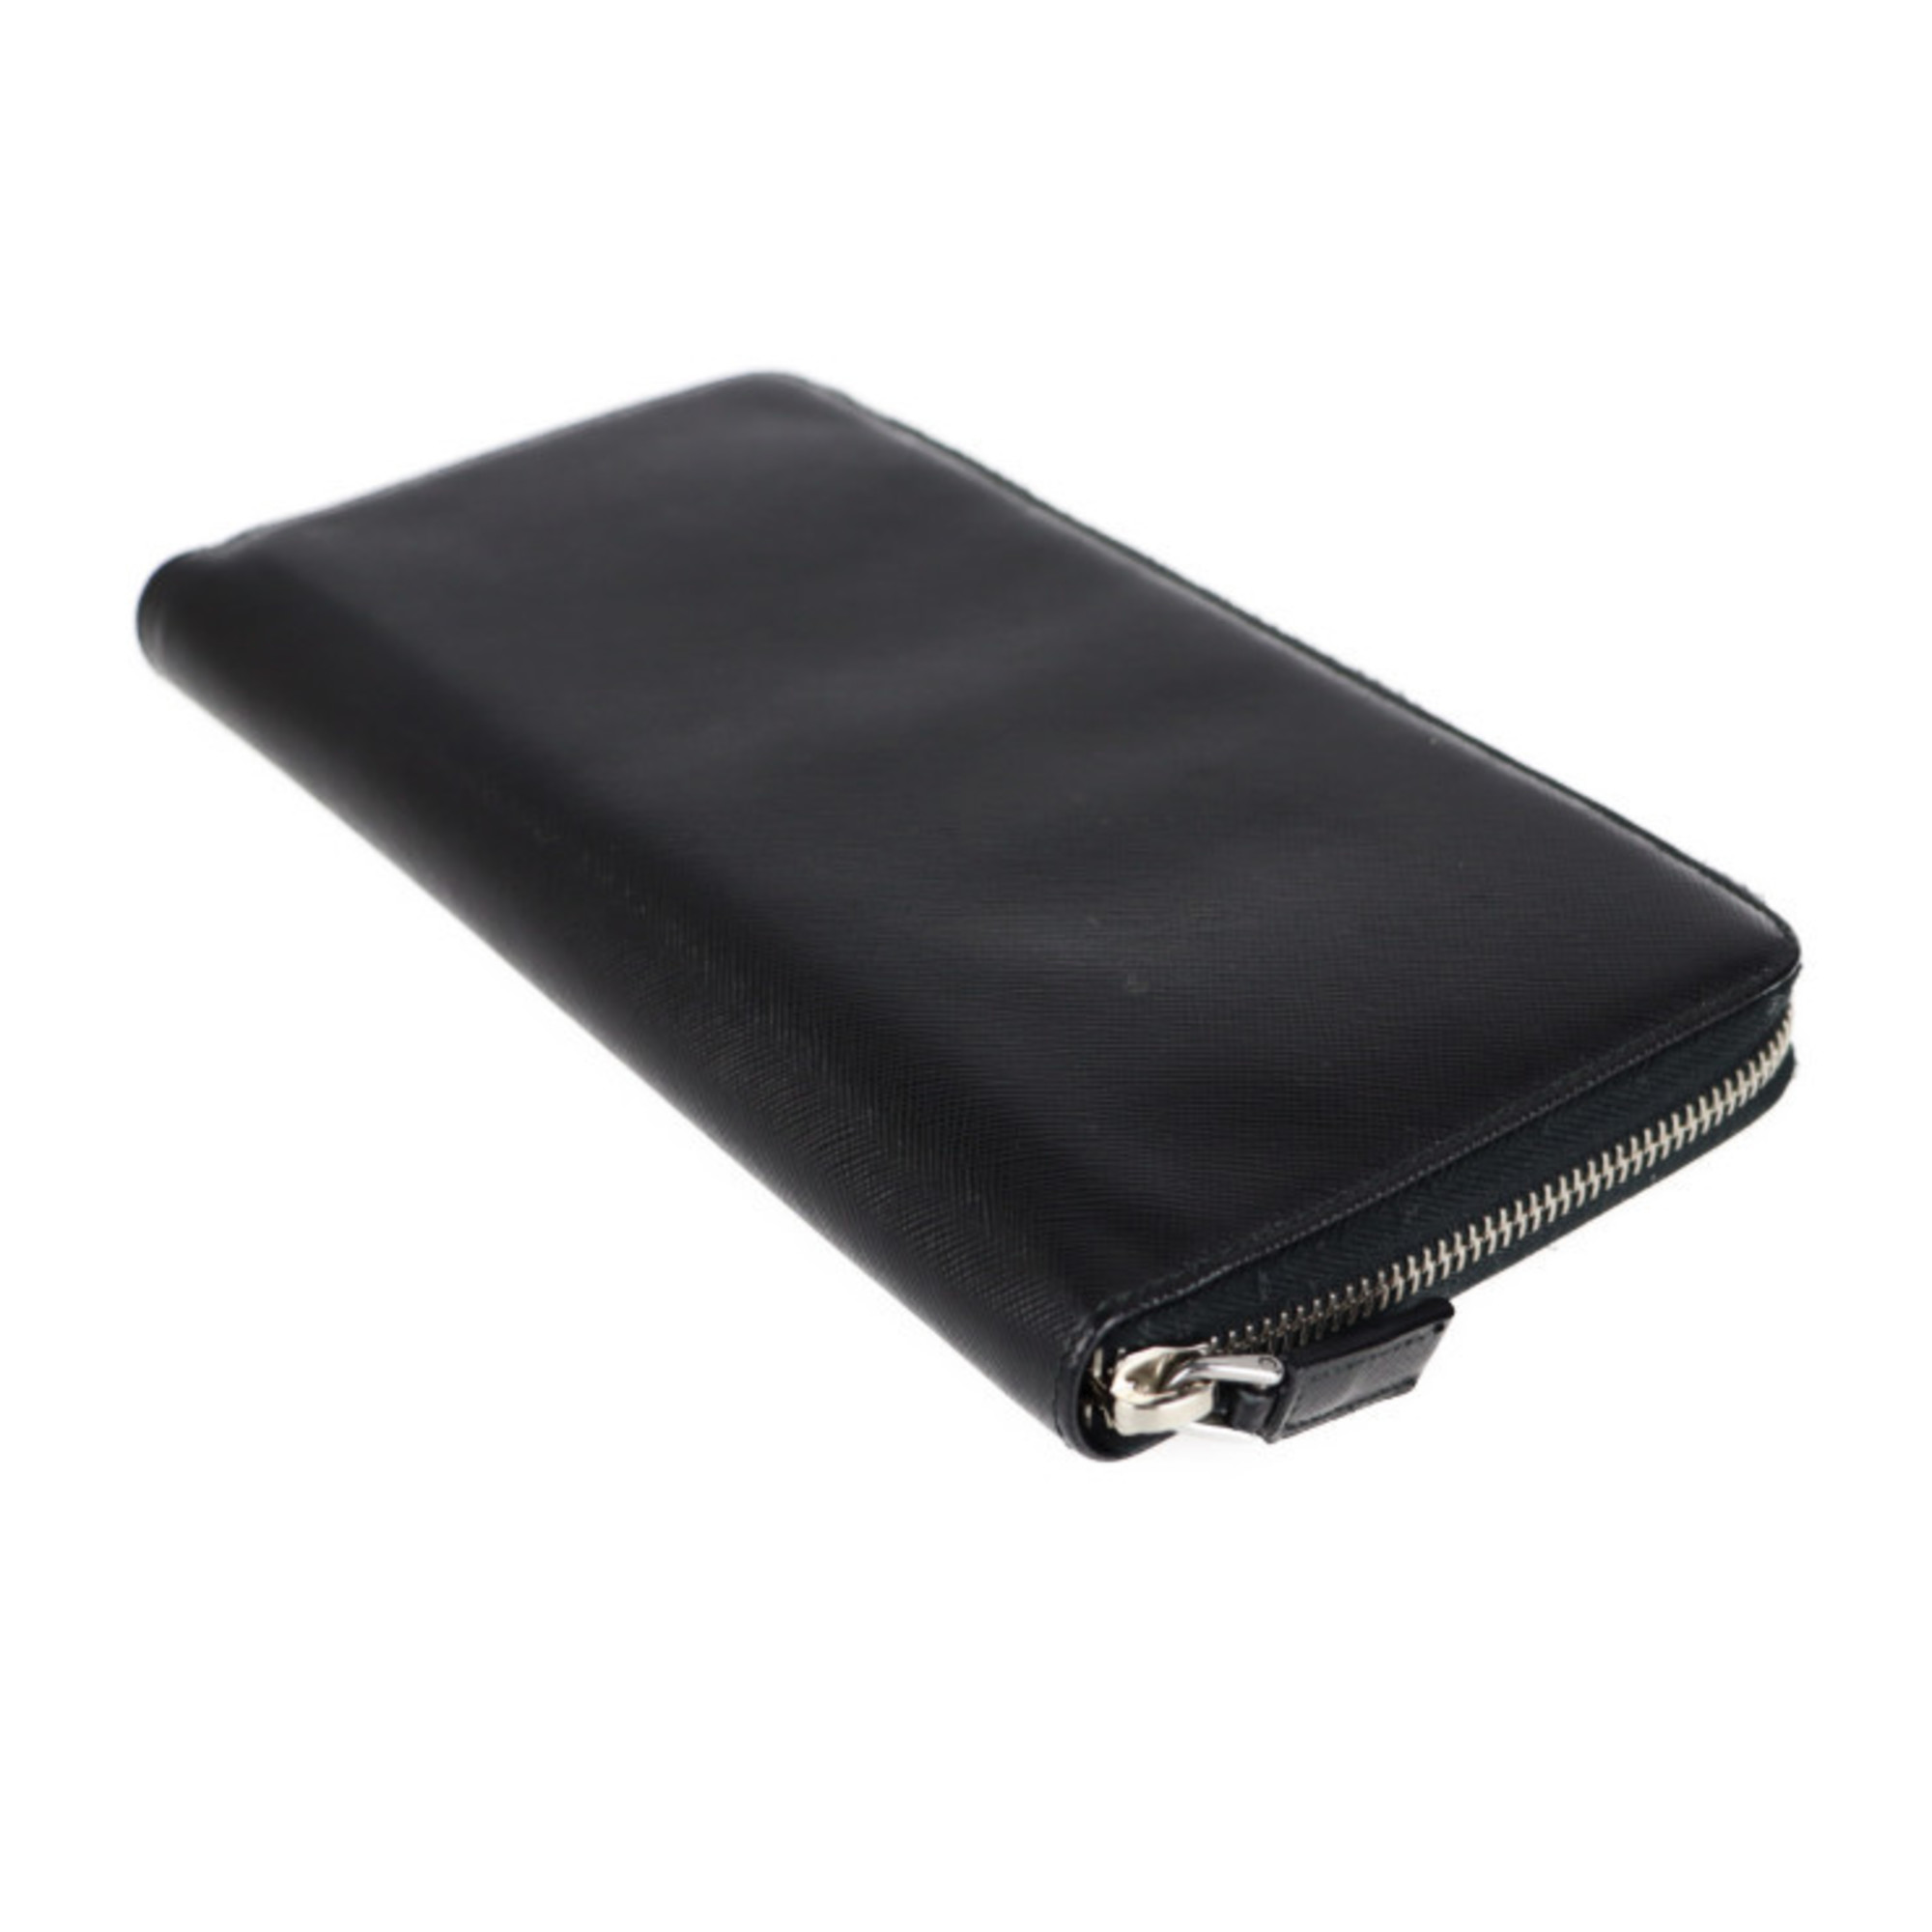 PRADA Prada long wallet 2M1220 saffiano leather NERO black organizer round zipper travel case